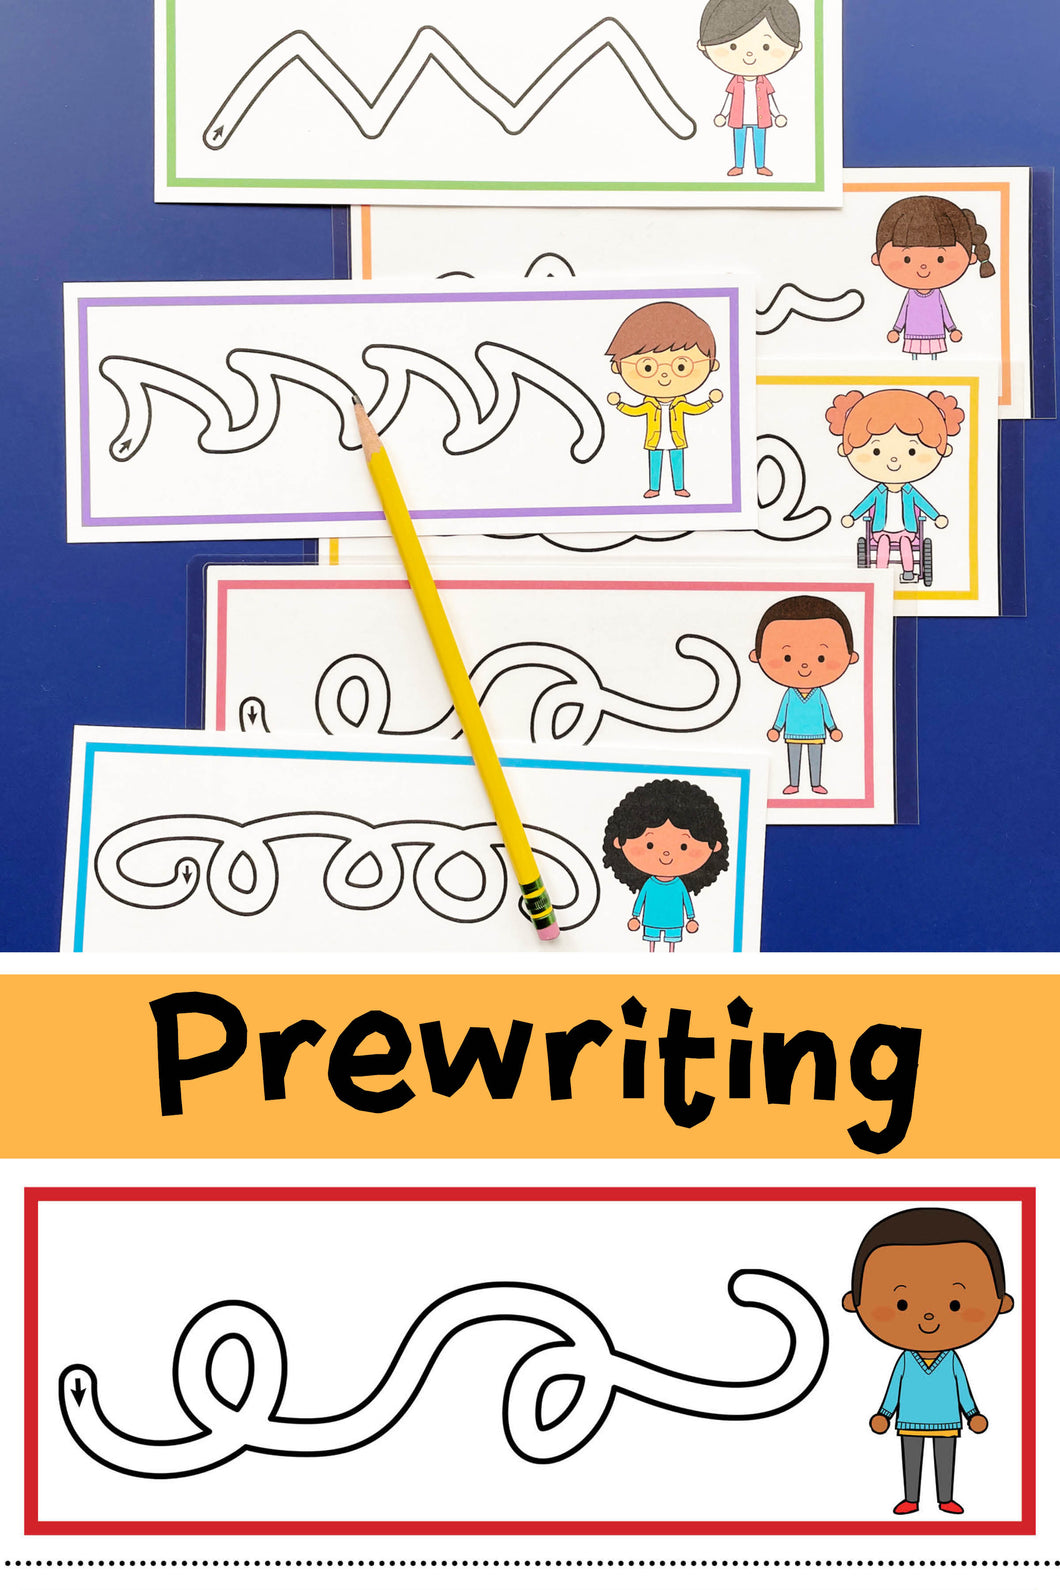 Prewriting preschool activity. Your preschoolers will love tracing inside the lines.